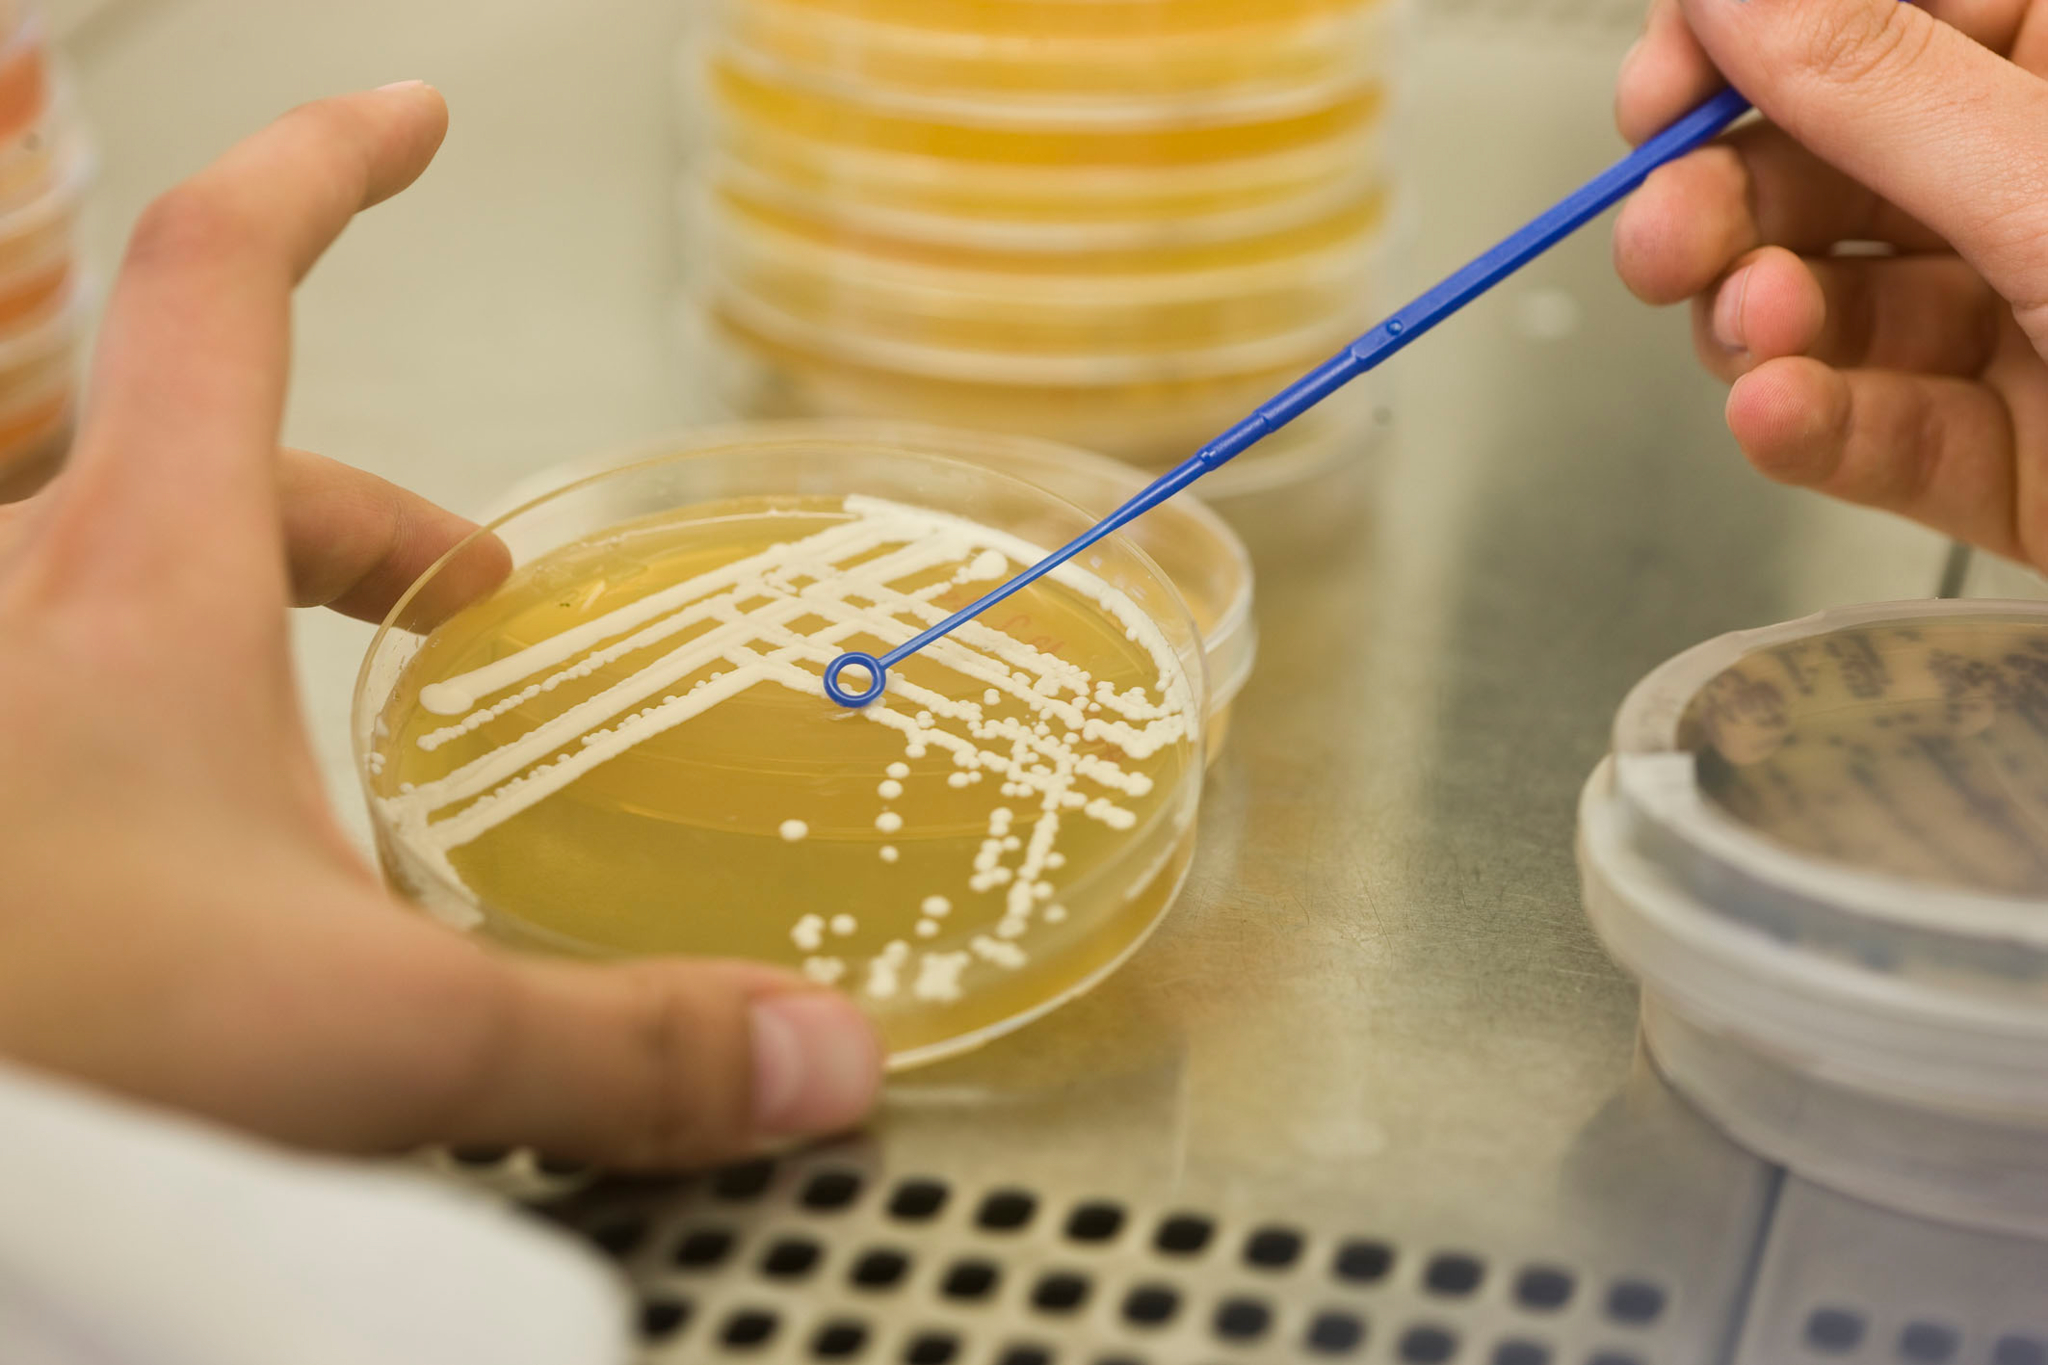 Bacterial culture in a Petri dish